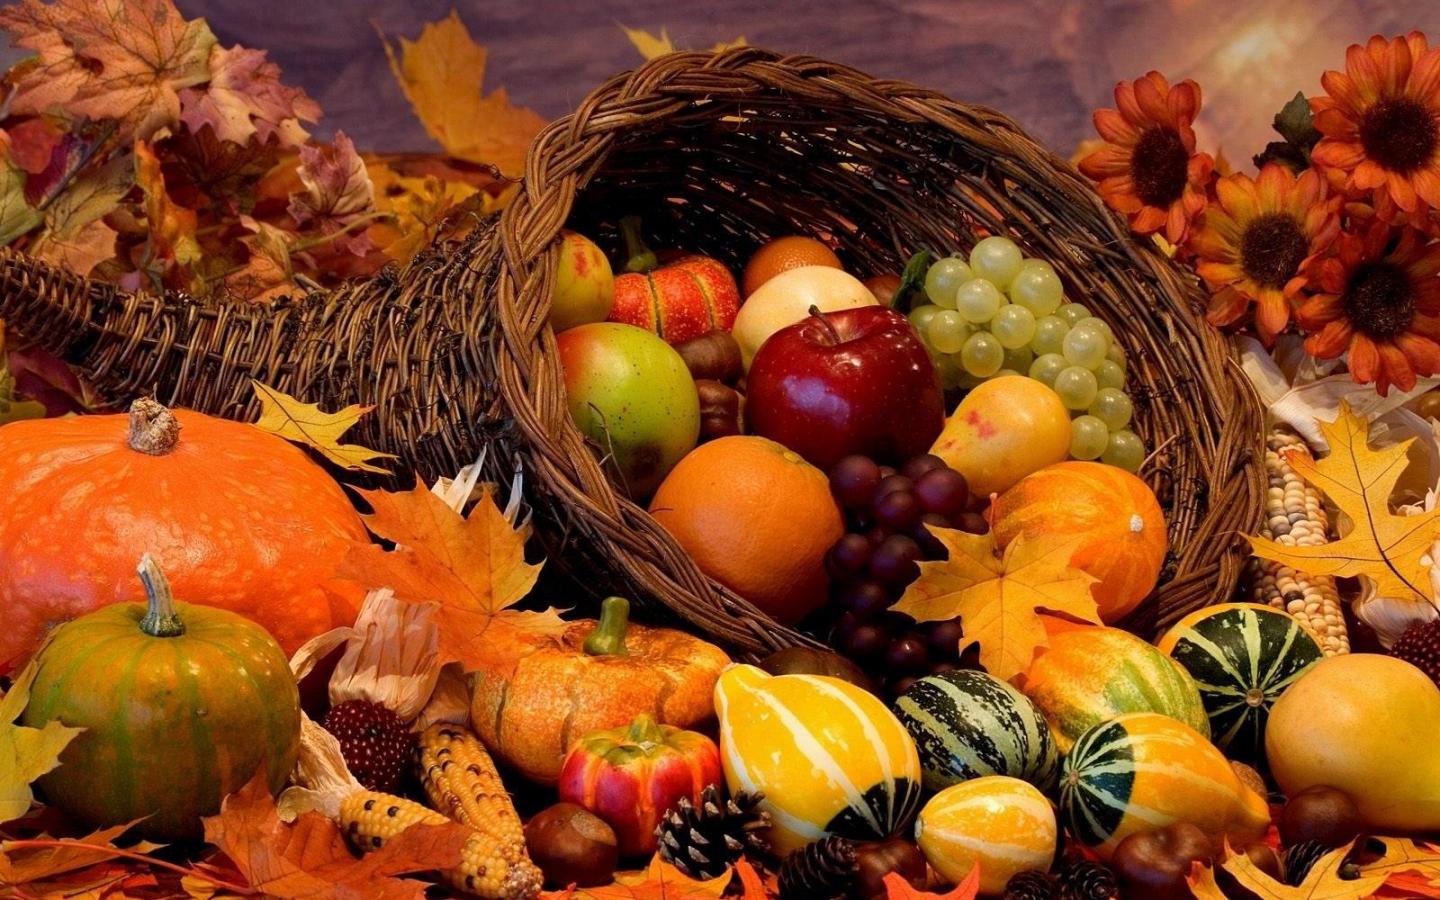 Autumn Harvest Wallpaper Hq Desktop